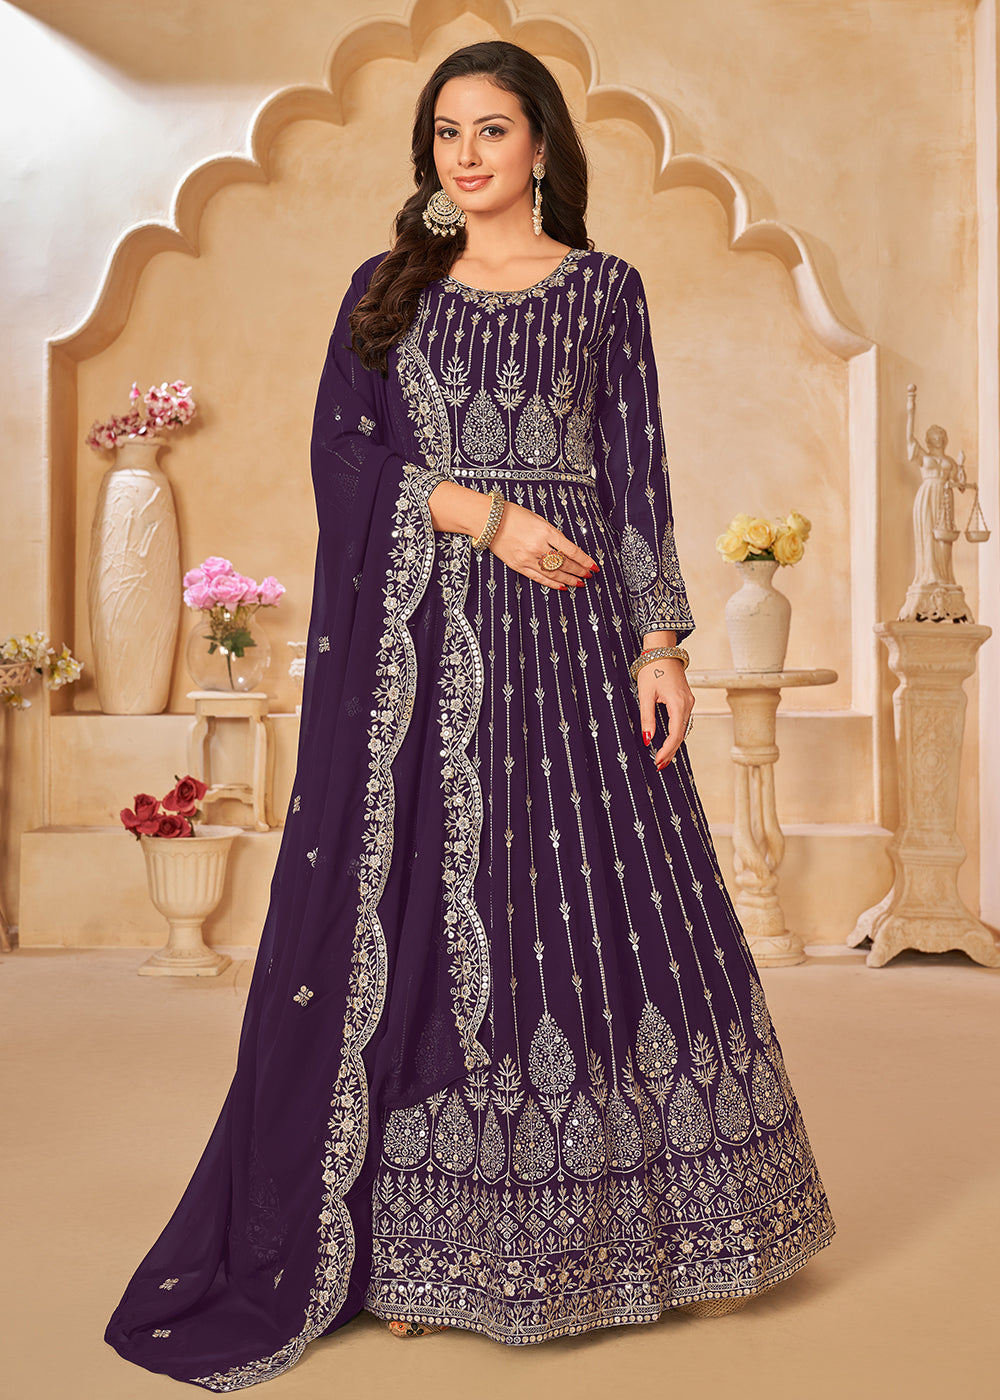 Buy Now Purple Resham Zari Embroidered Festive Anarkali Suit Online in USA, UK, Australia, New Zealand, Canada & Worldwide at Empress Clothing. 